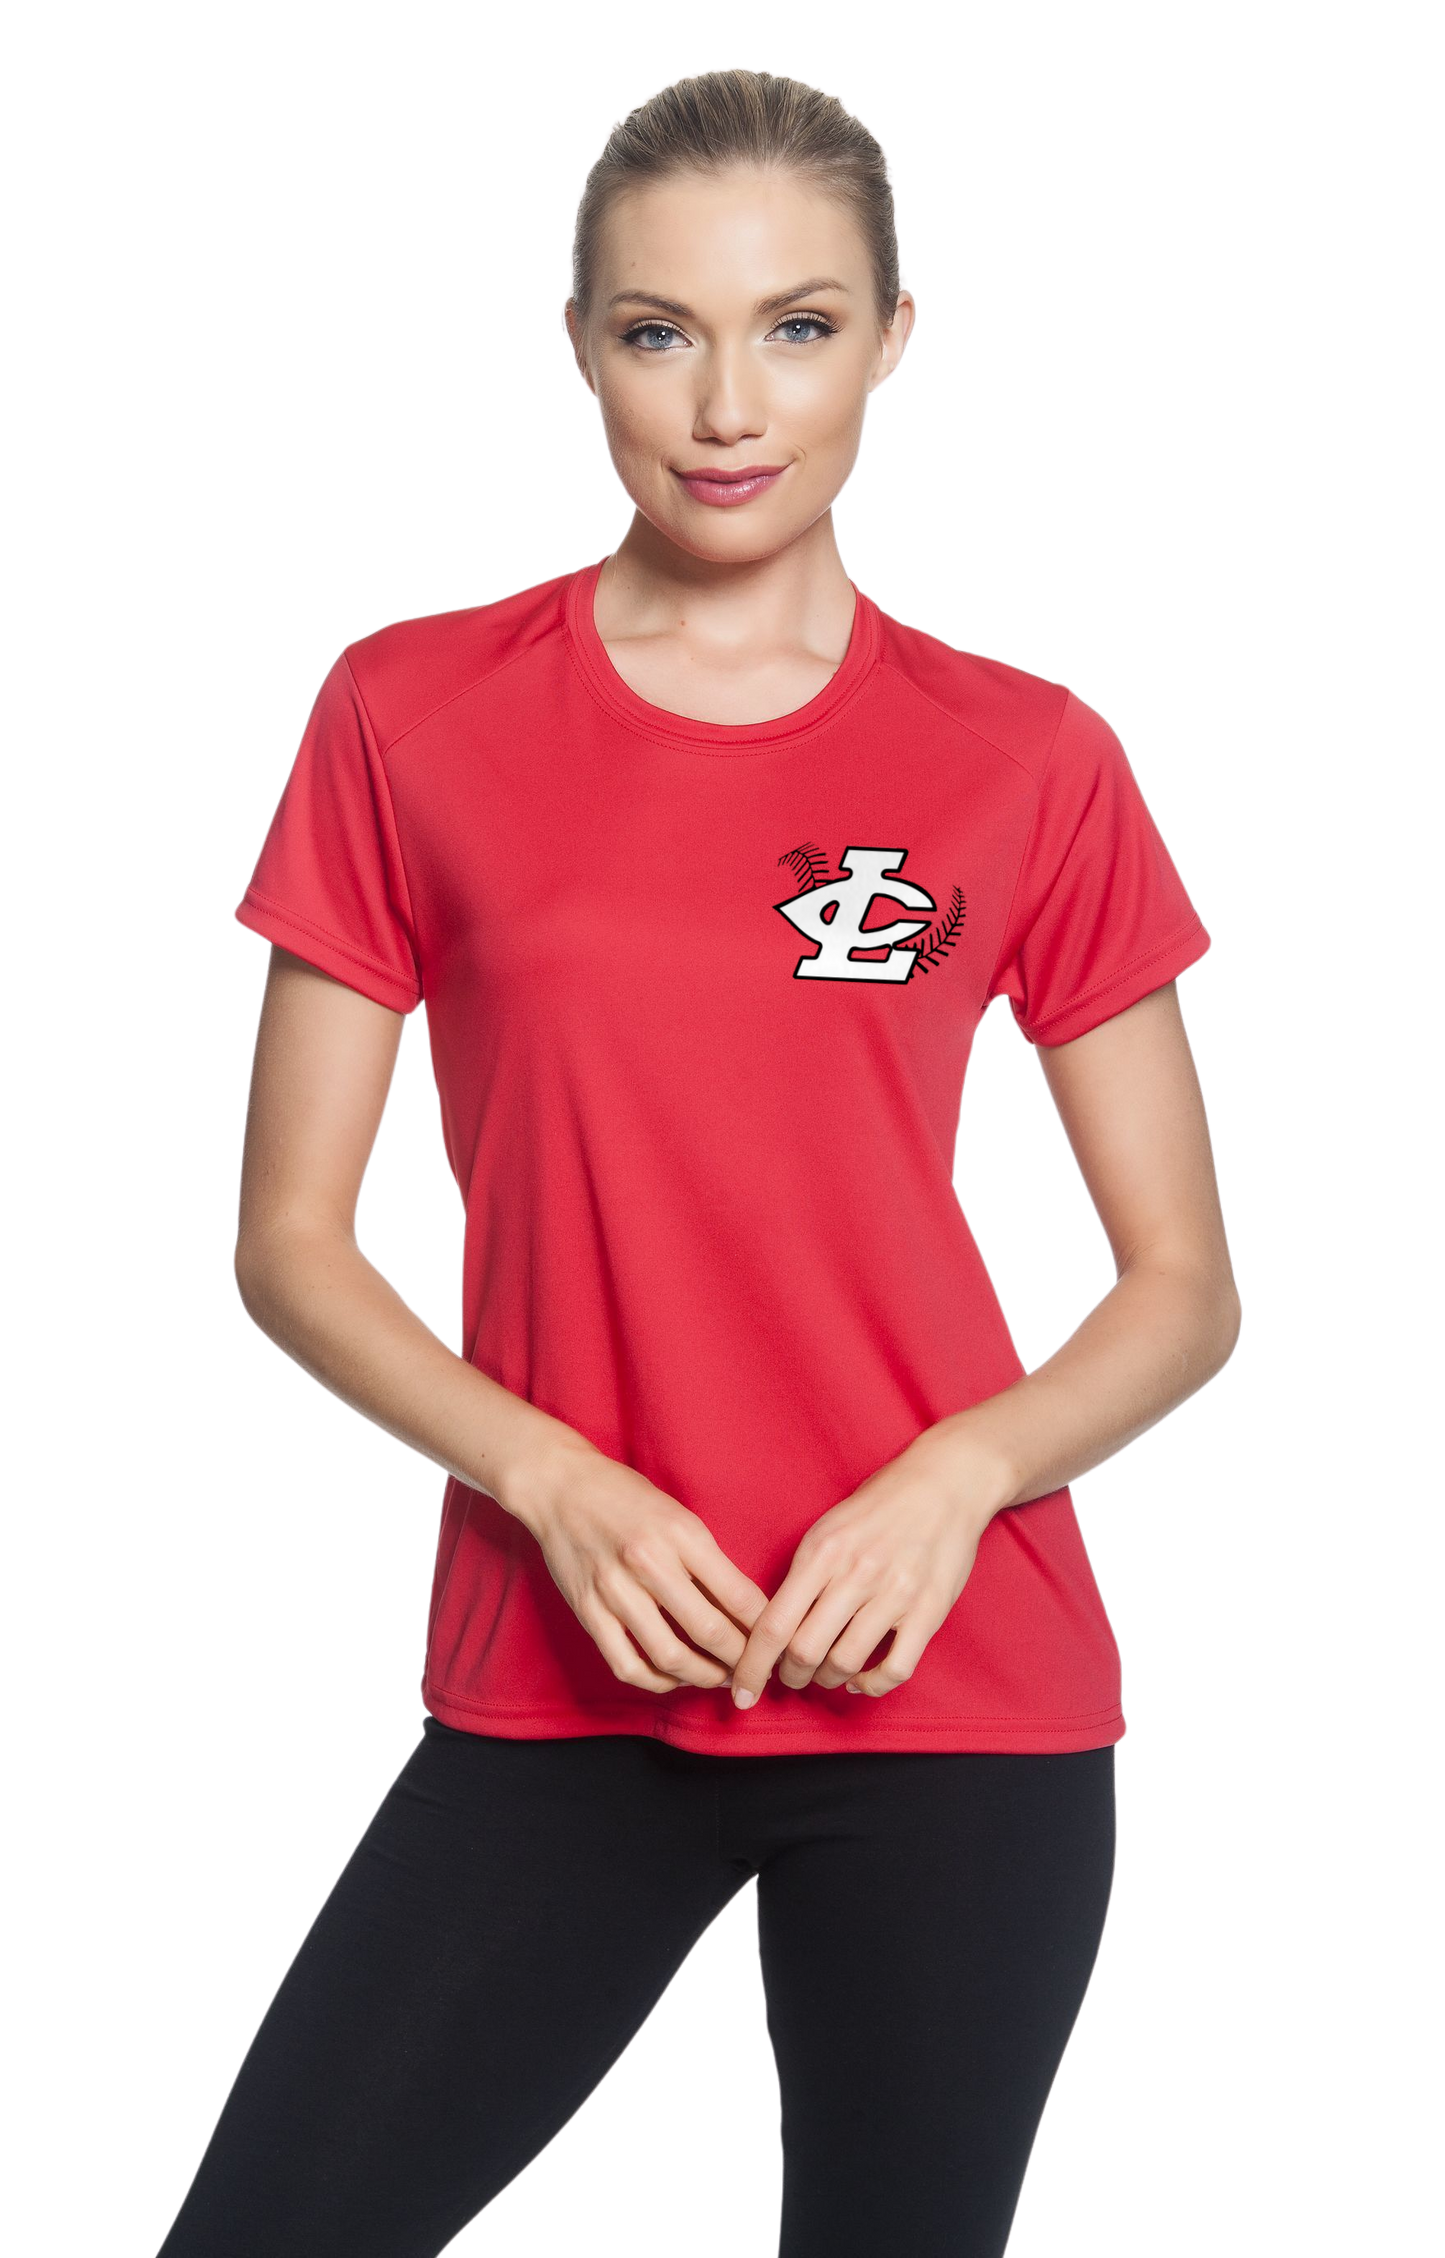 CLLL A4 Womens Cut Cooling Performance Short Sleeve T-Shirt RED